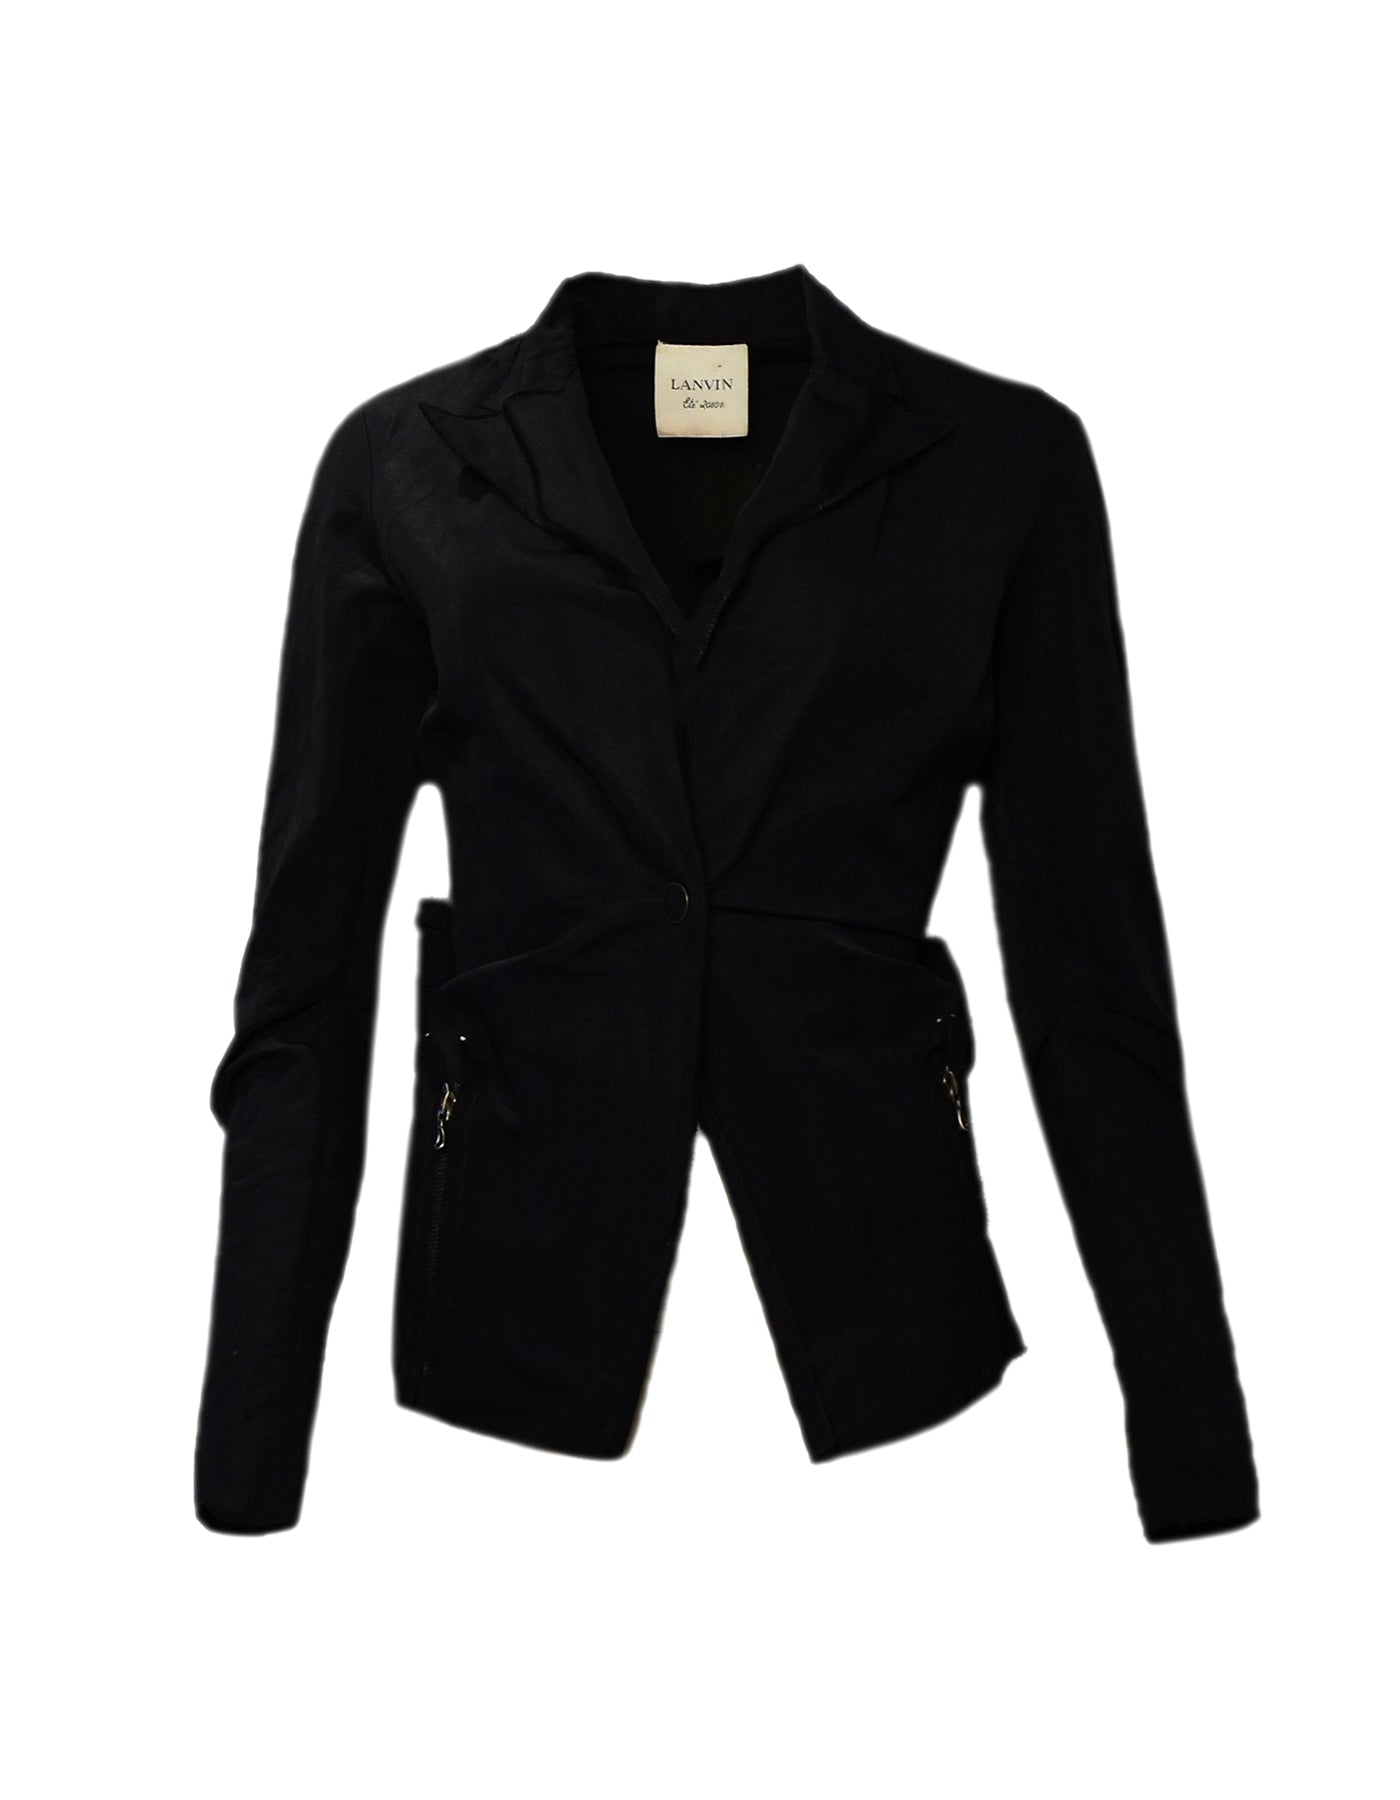 Lanvin Black Cotton Jacket w/ Bow & Side Zipper sz 6